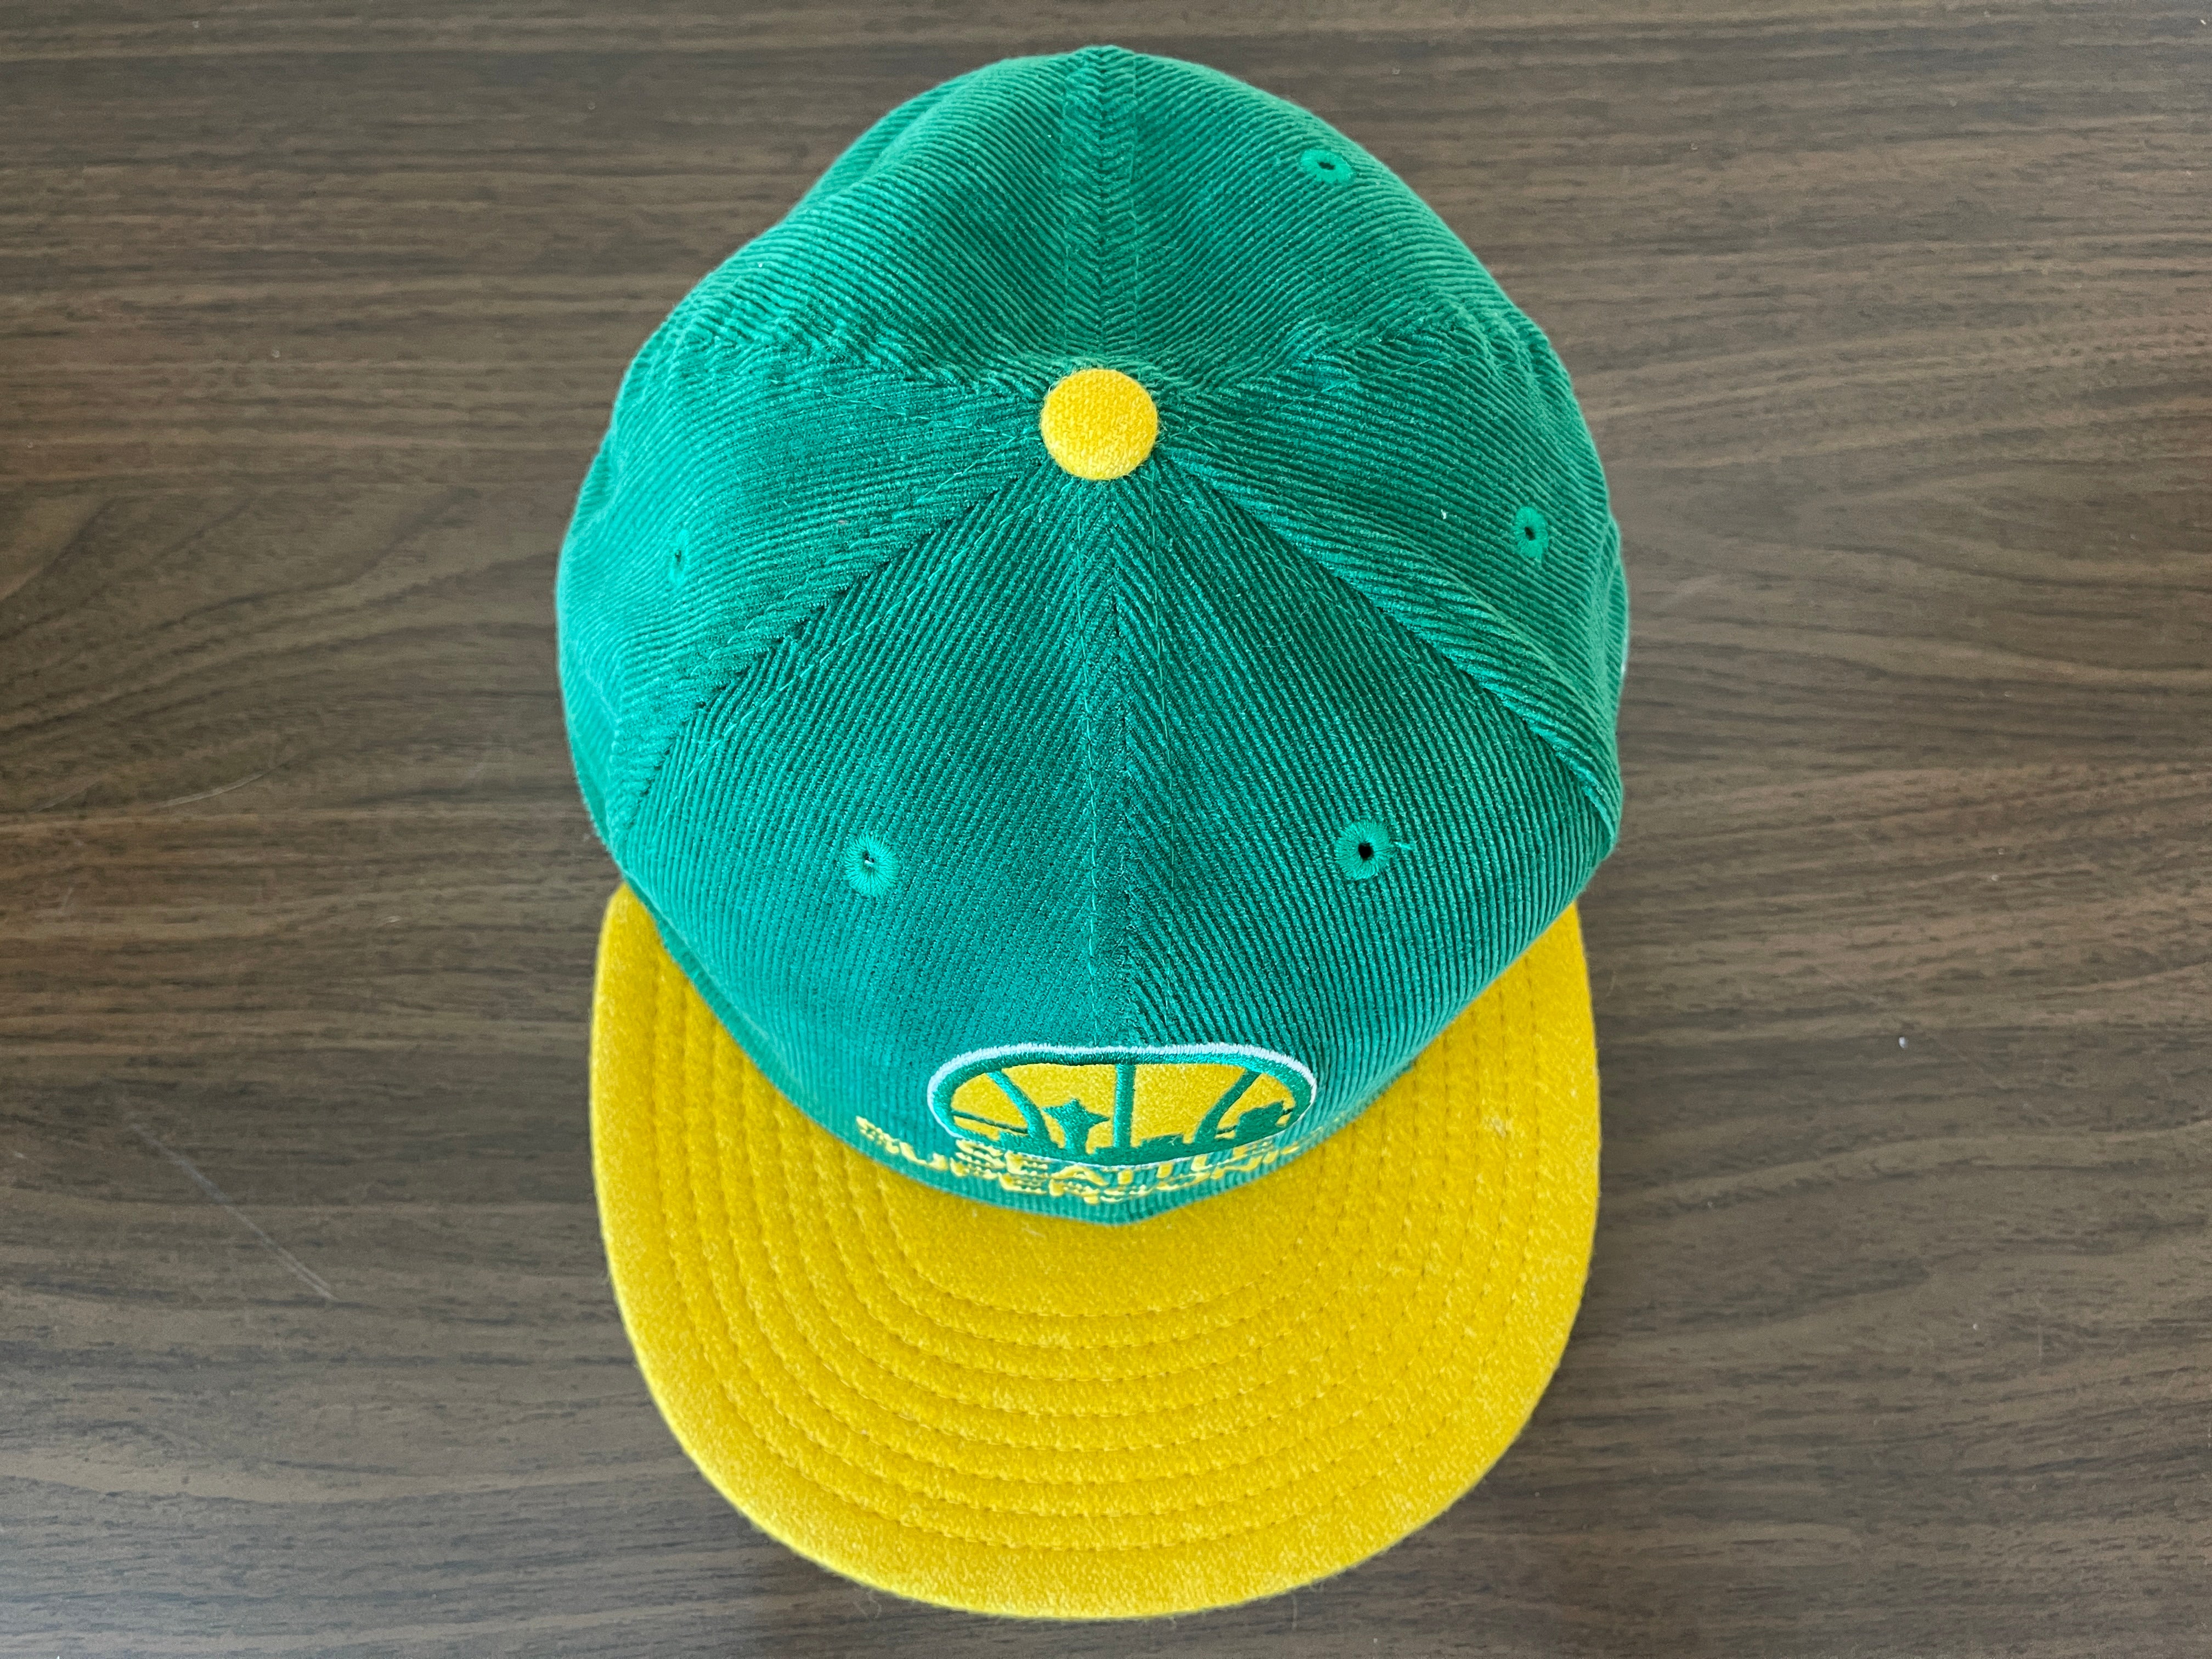 Seattle Supersonics NBA BASKETBALL NEW ERA FITS Green Corduroy Snapback Cap  Hat!